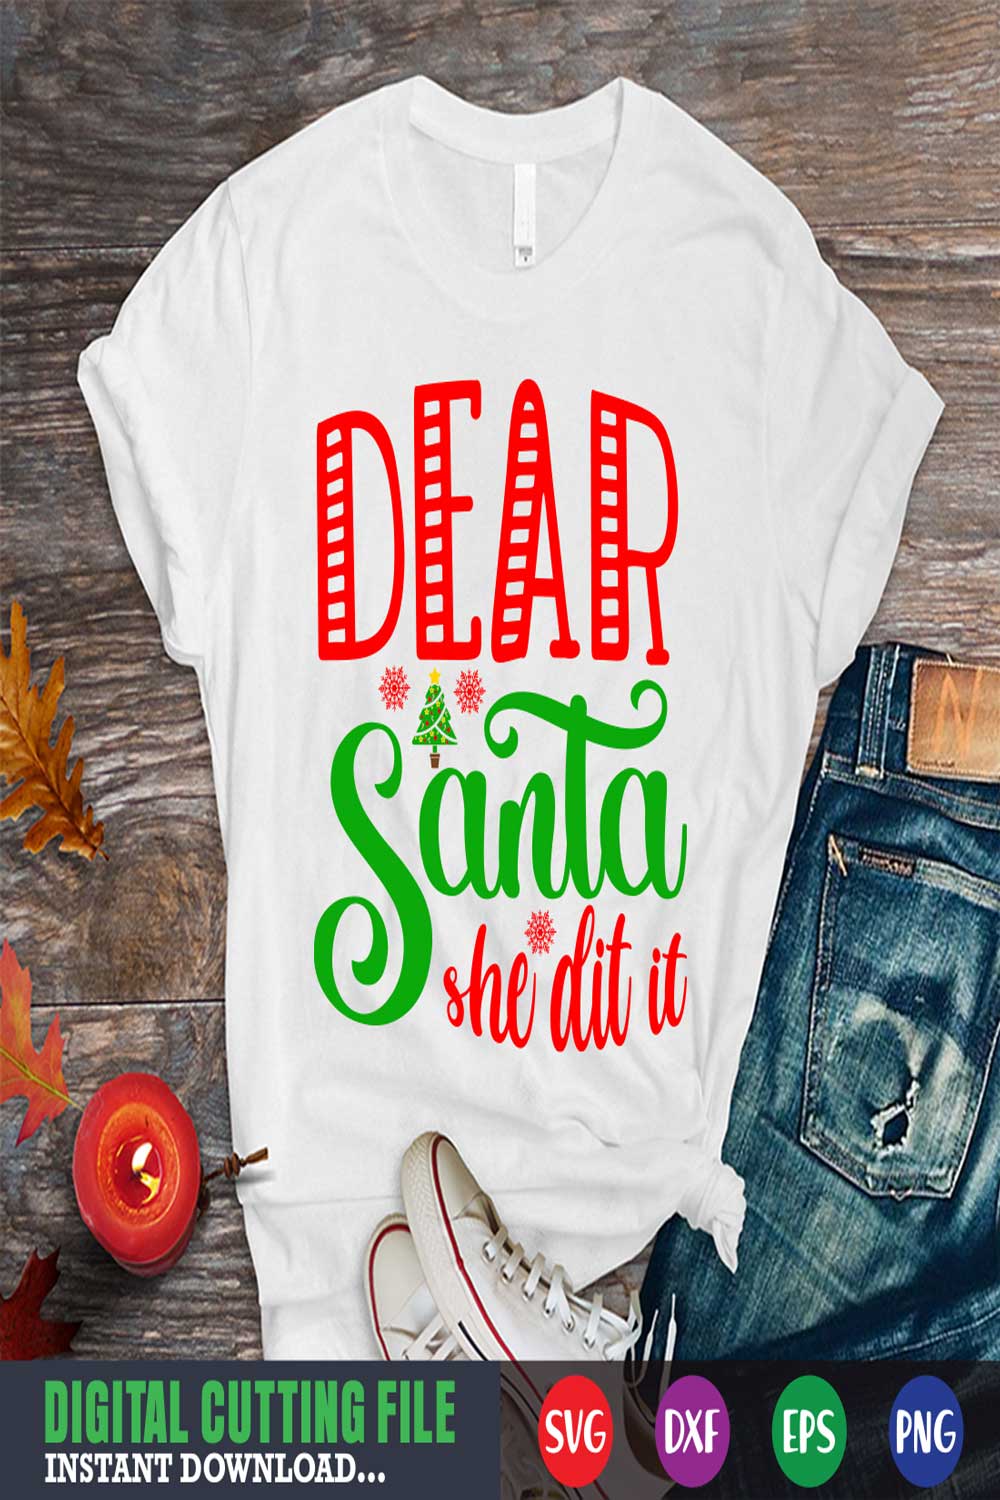 Dear Santa She Did It Typography Design pinterest image.